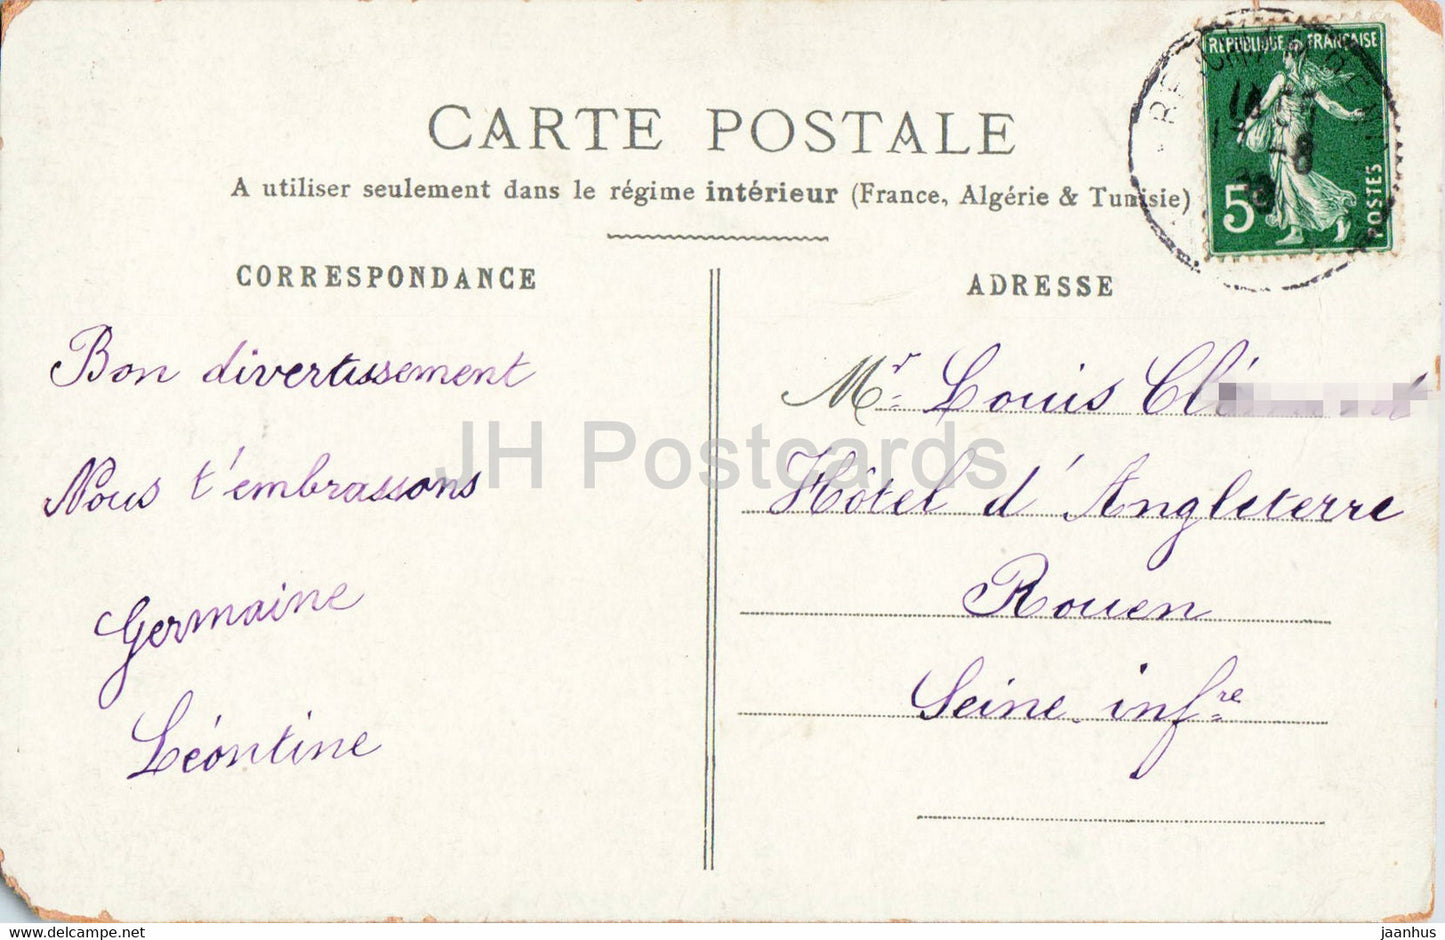 illustration - soldat et femme - militaire - carte postale ancienne - France - occasion